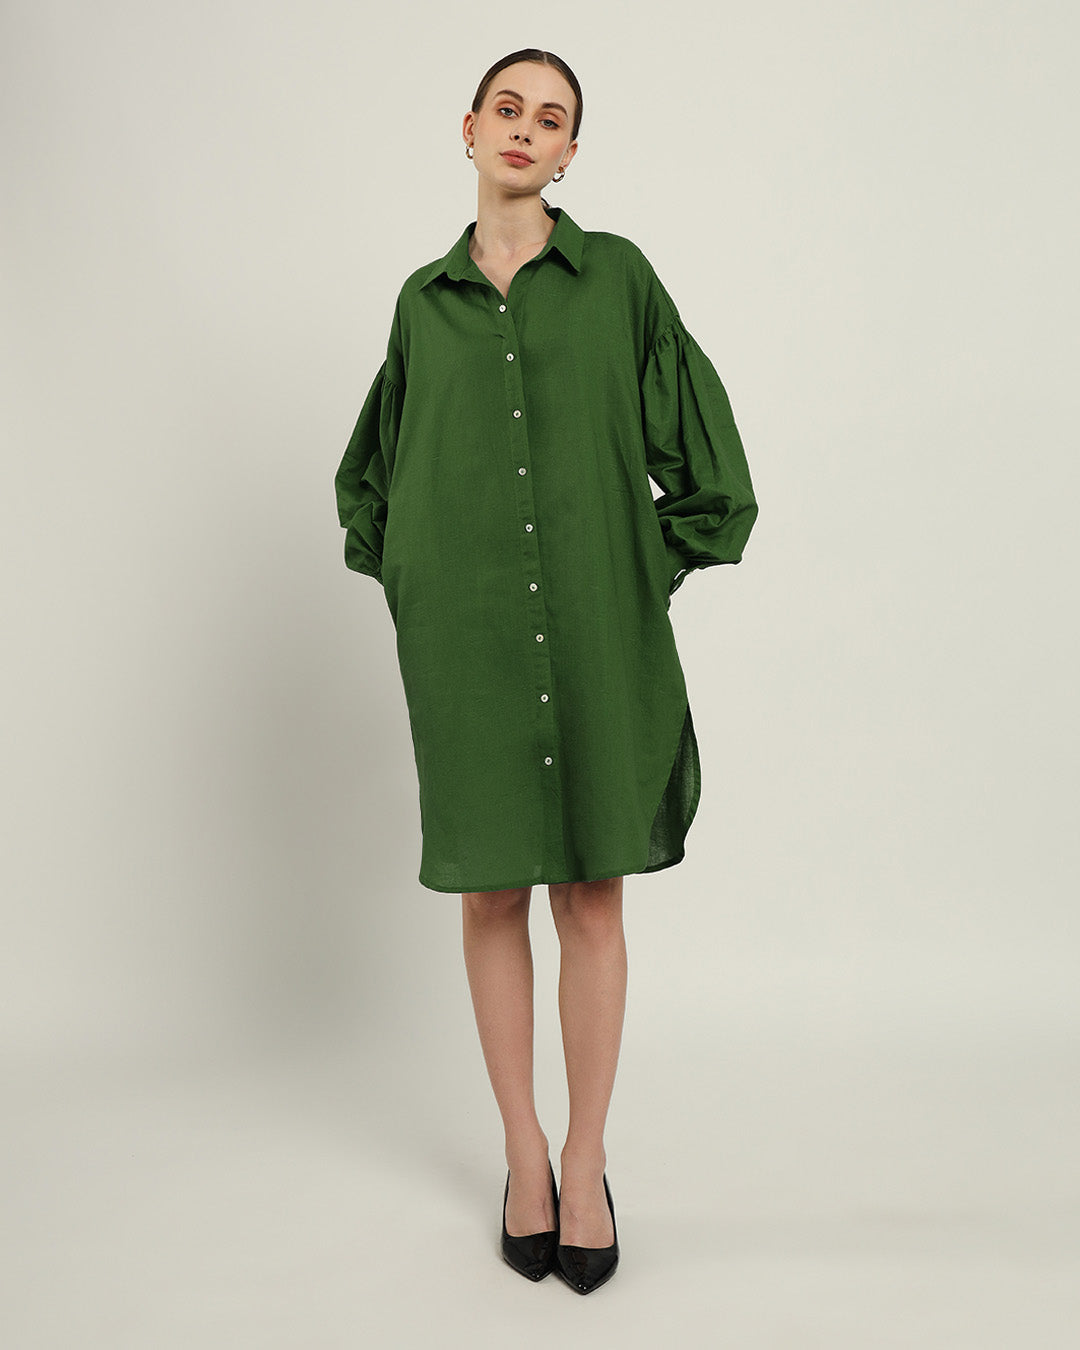 The Derby Emerald Cotton Dress